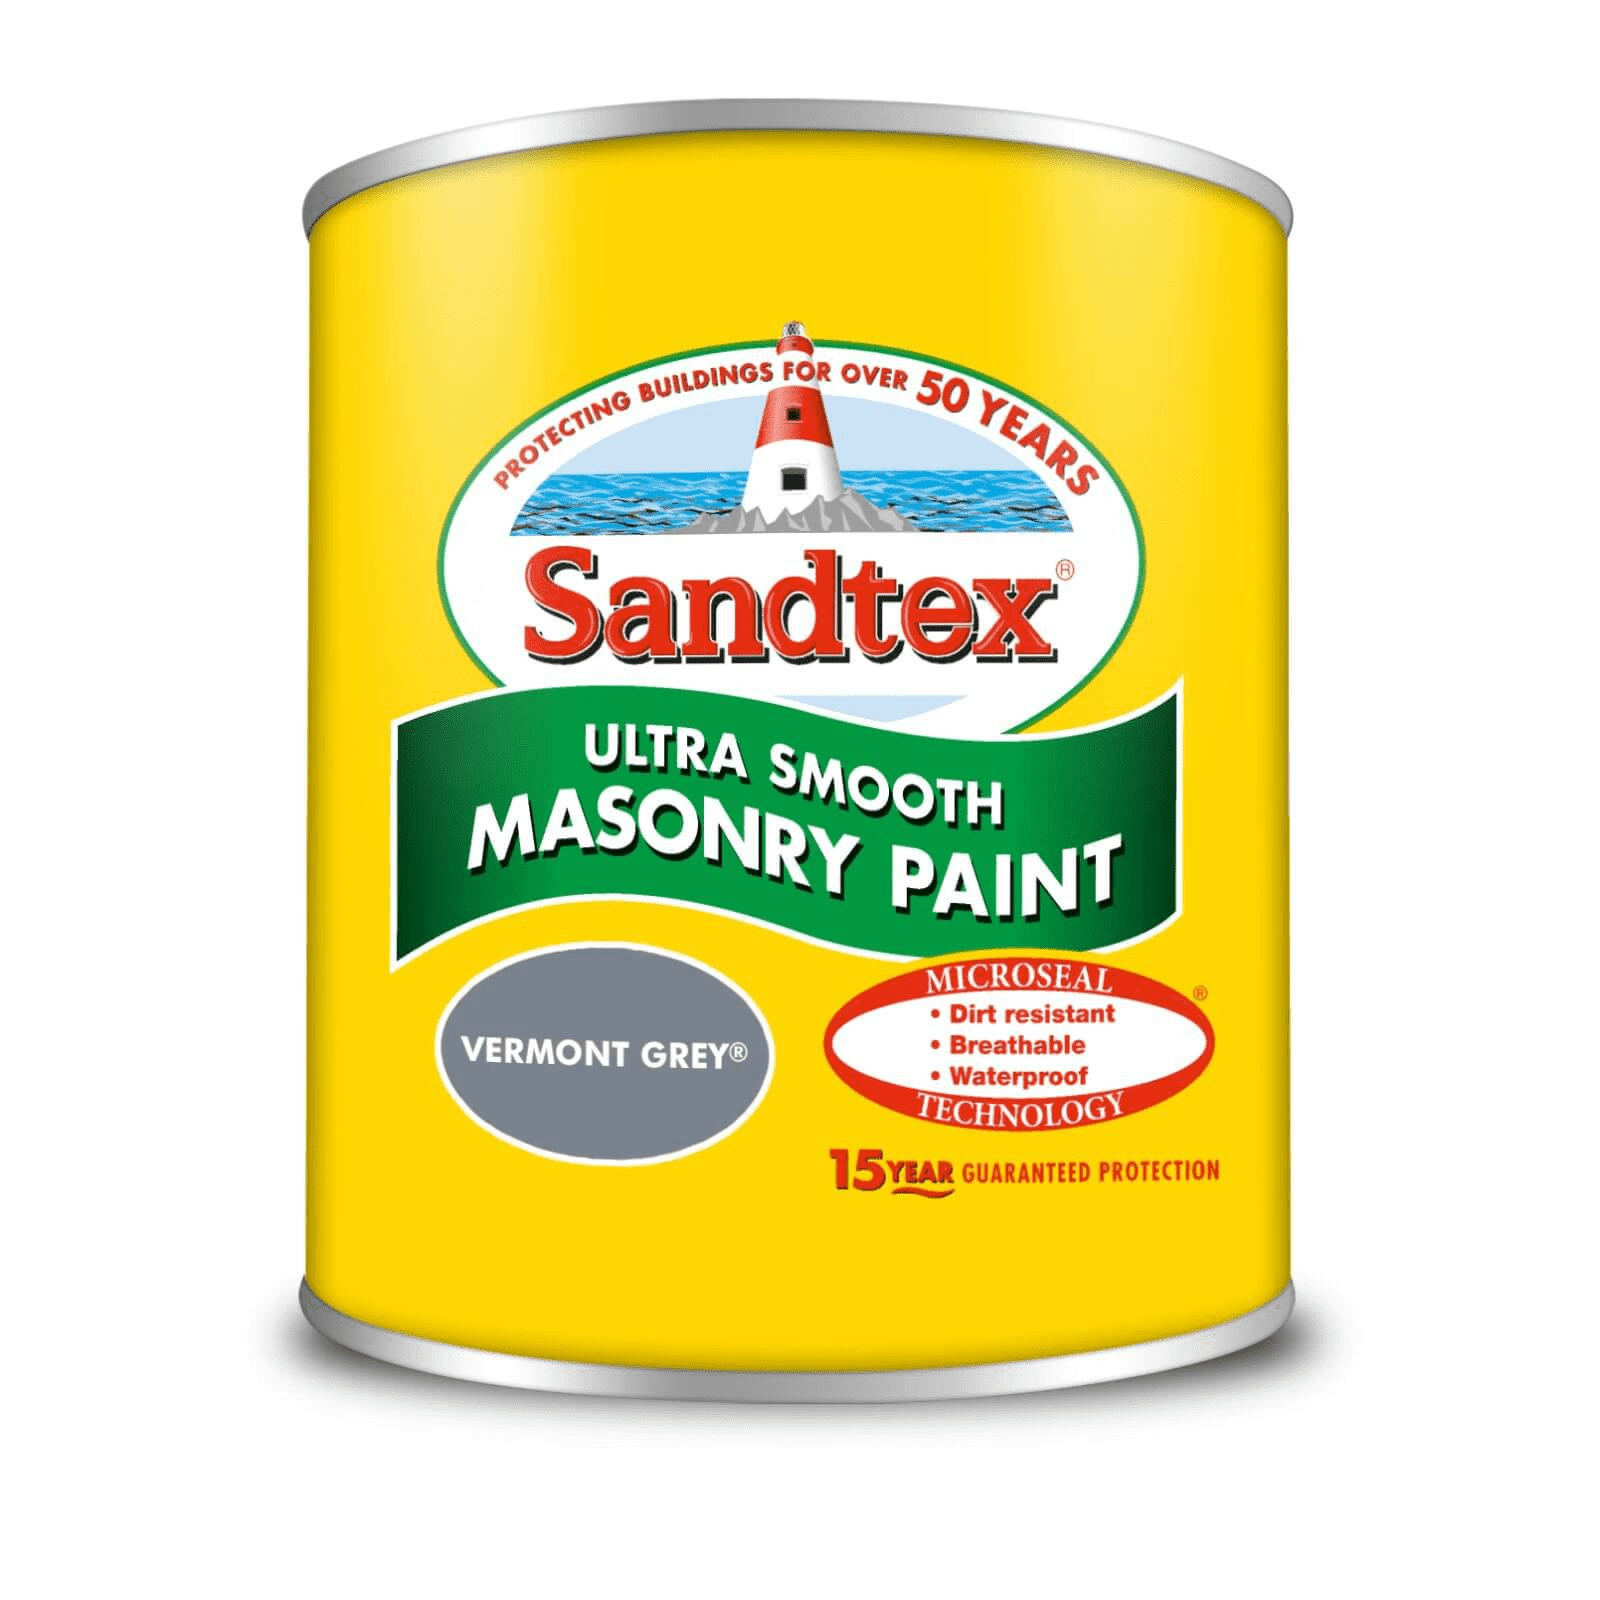 Sandtex-Ultra-Smooth-Masonry-Paint-Vermont-Grey-150ml